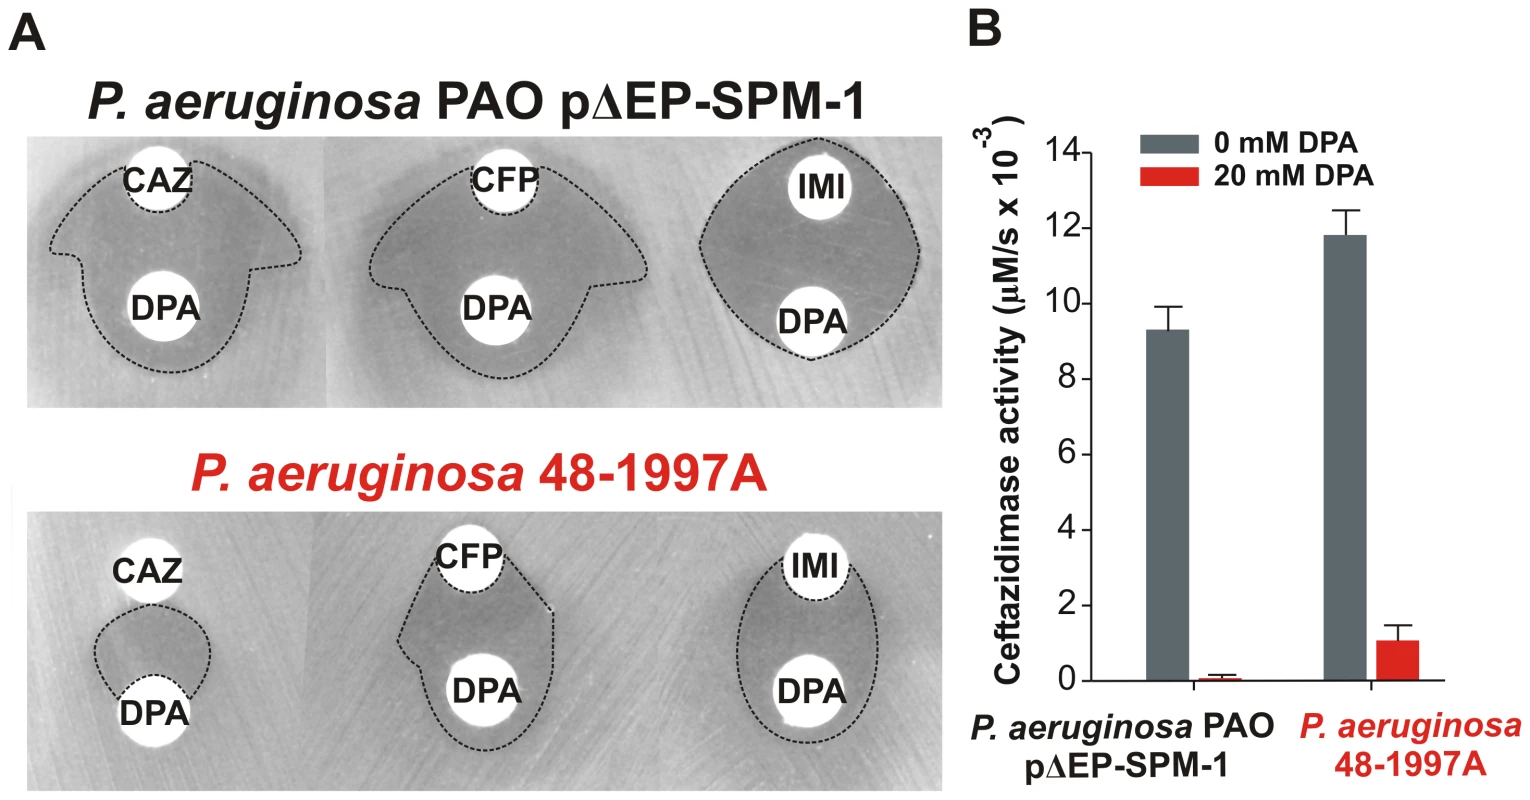 (A) Antibiograms of <i>P. aeruginosa</i> PAO pΔEP-SPM-1 and <i>P. aeruginosa</i> 48-1997A against disks embedded with 30 µg ceftazidime (CAZ), 30 µg cefepime (CFP) and 10 µg imipenem (IMI), alone or faced to 1.5 mg dipicolinic acid (DPA) containing disks.